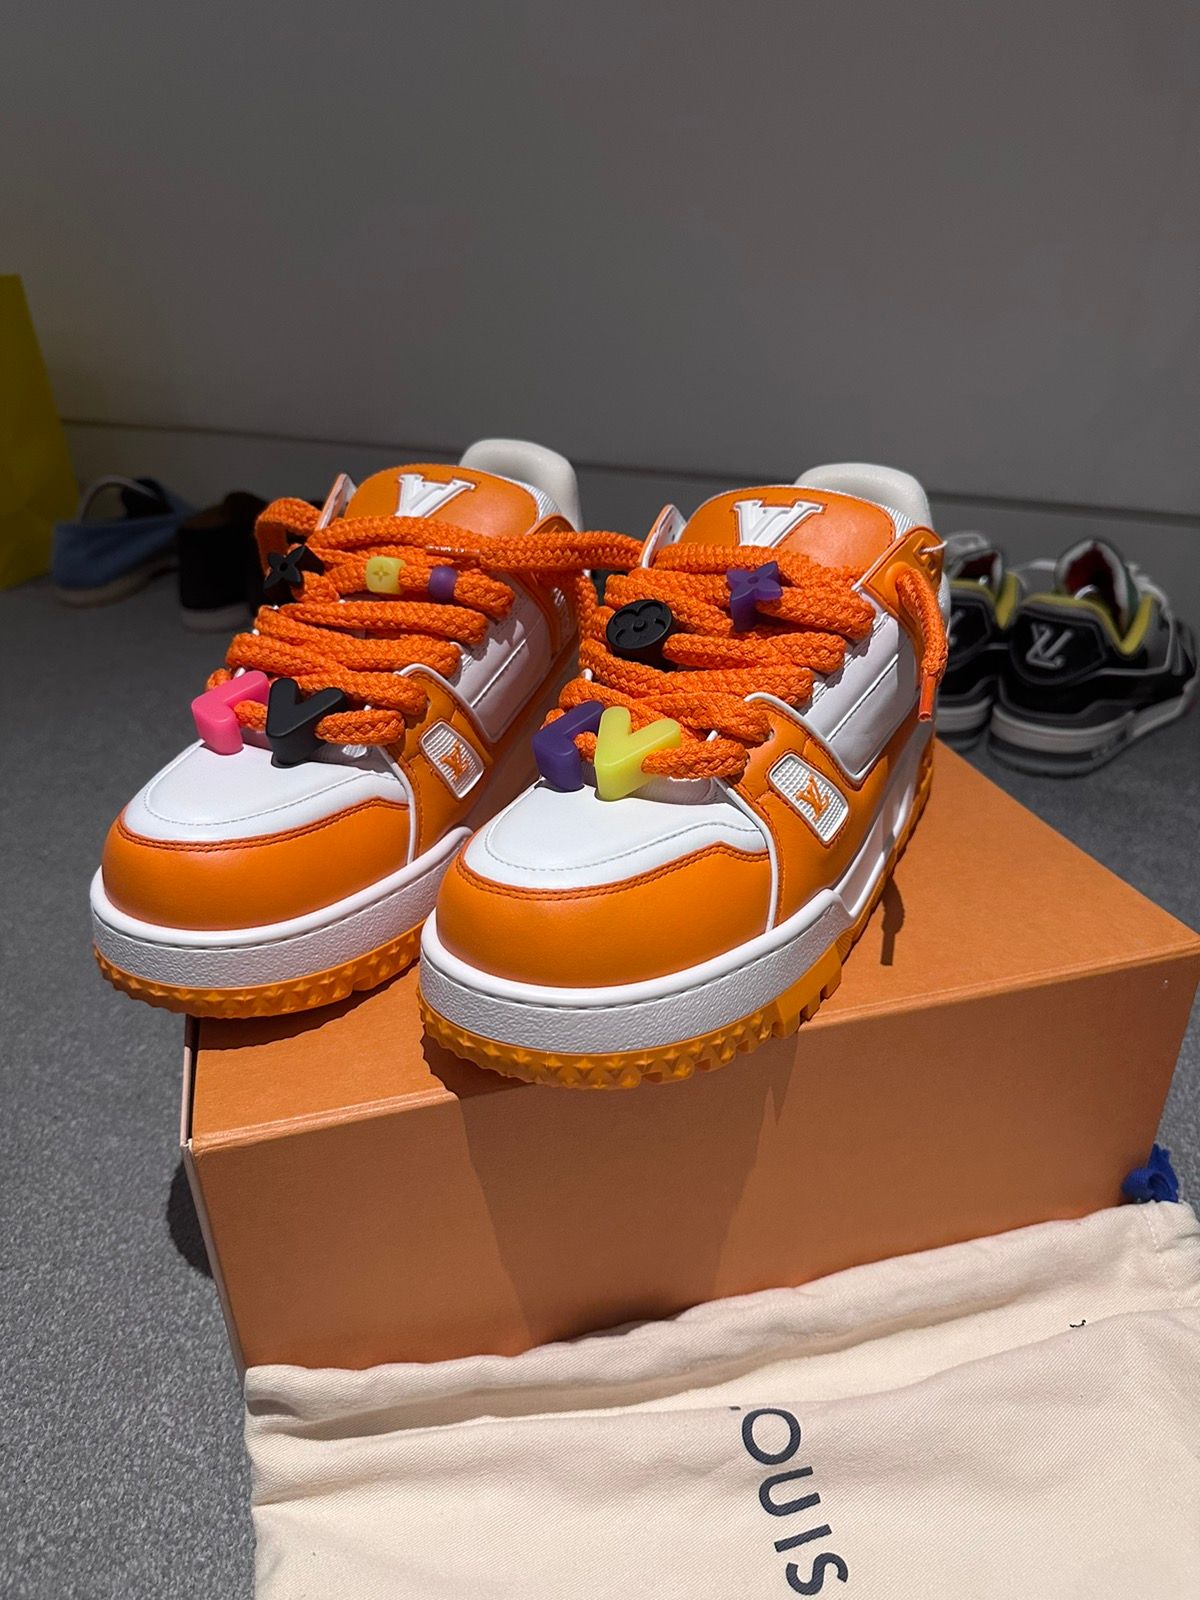 🔥599 000 сум 👟Louis Vuitton Trainer Sneakers Maxi Orange Размеры: 36,  37, 38, 39, 40 〰️〰️〰️〰️〰️〰️〰️〰️ 